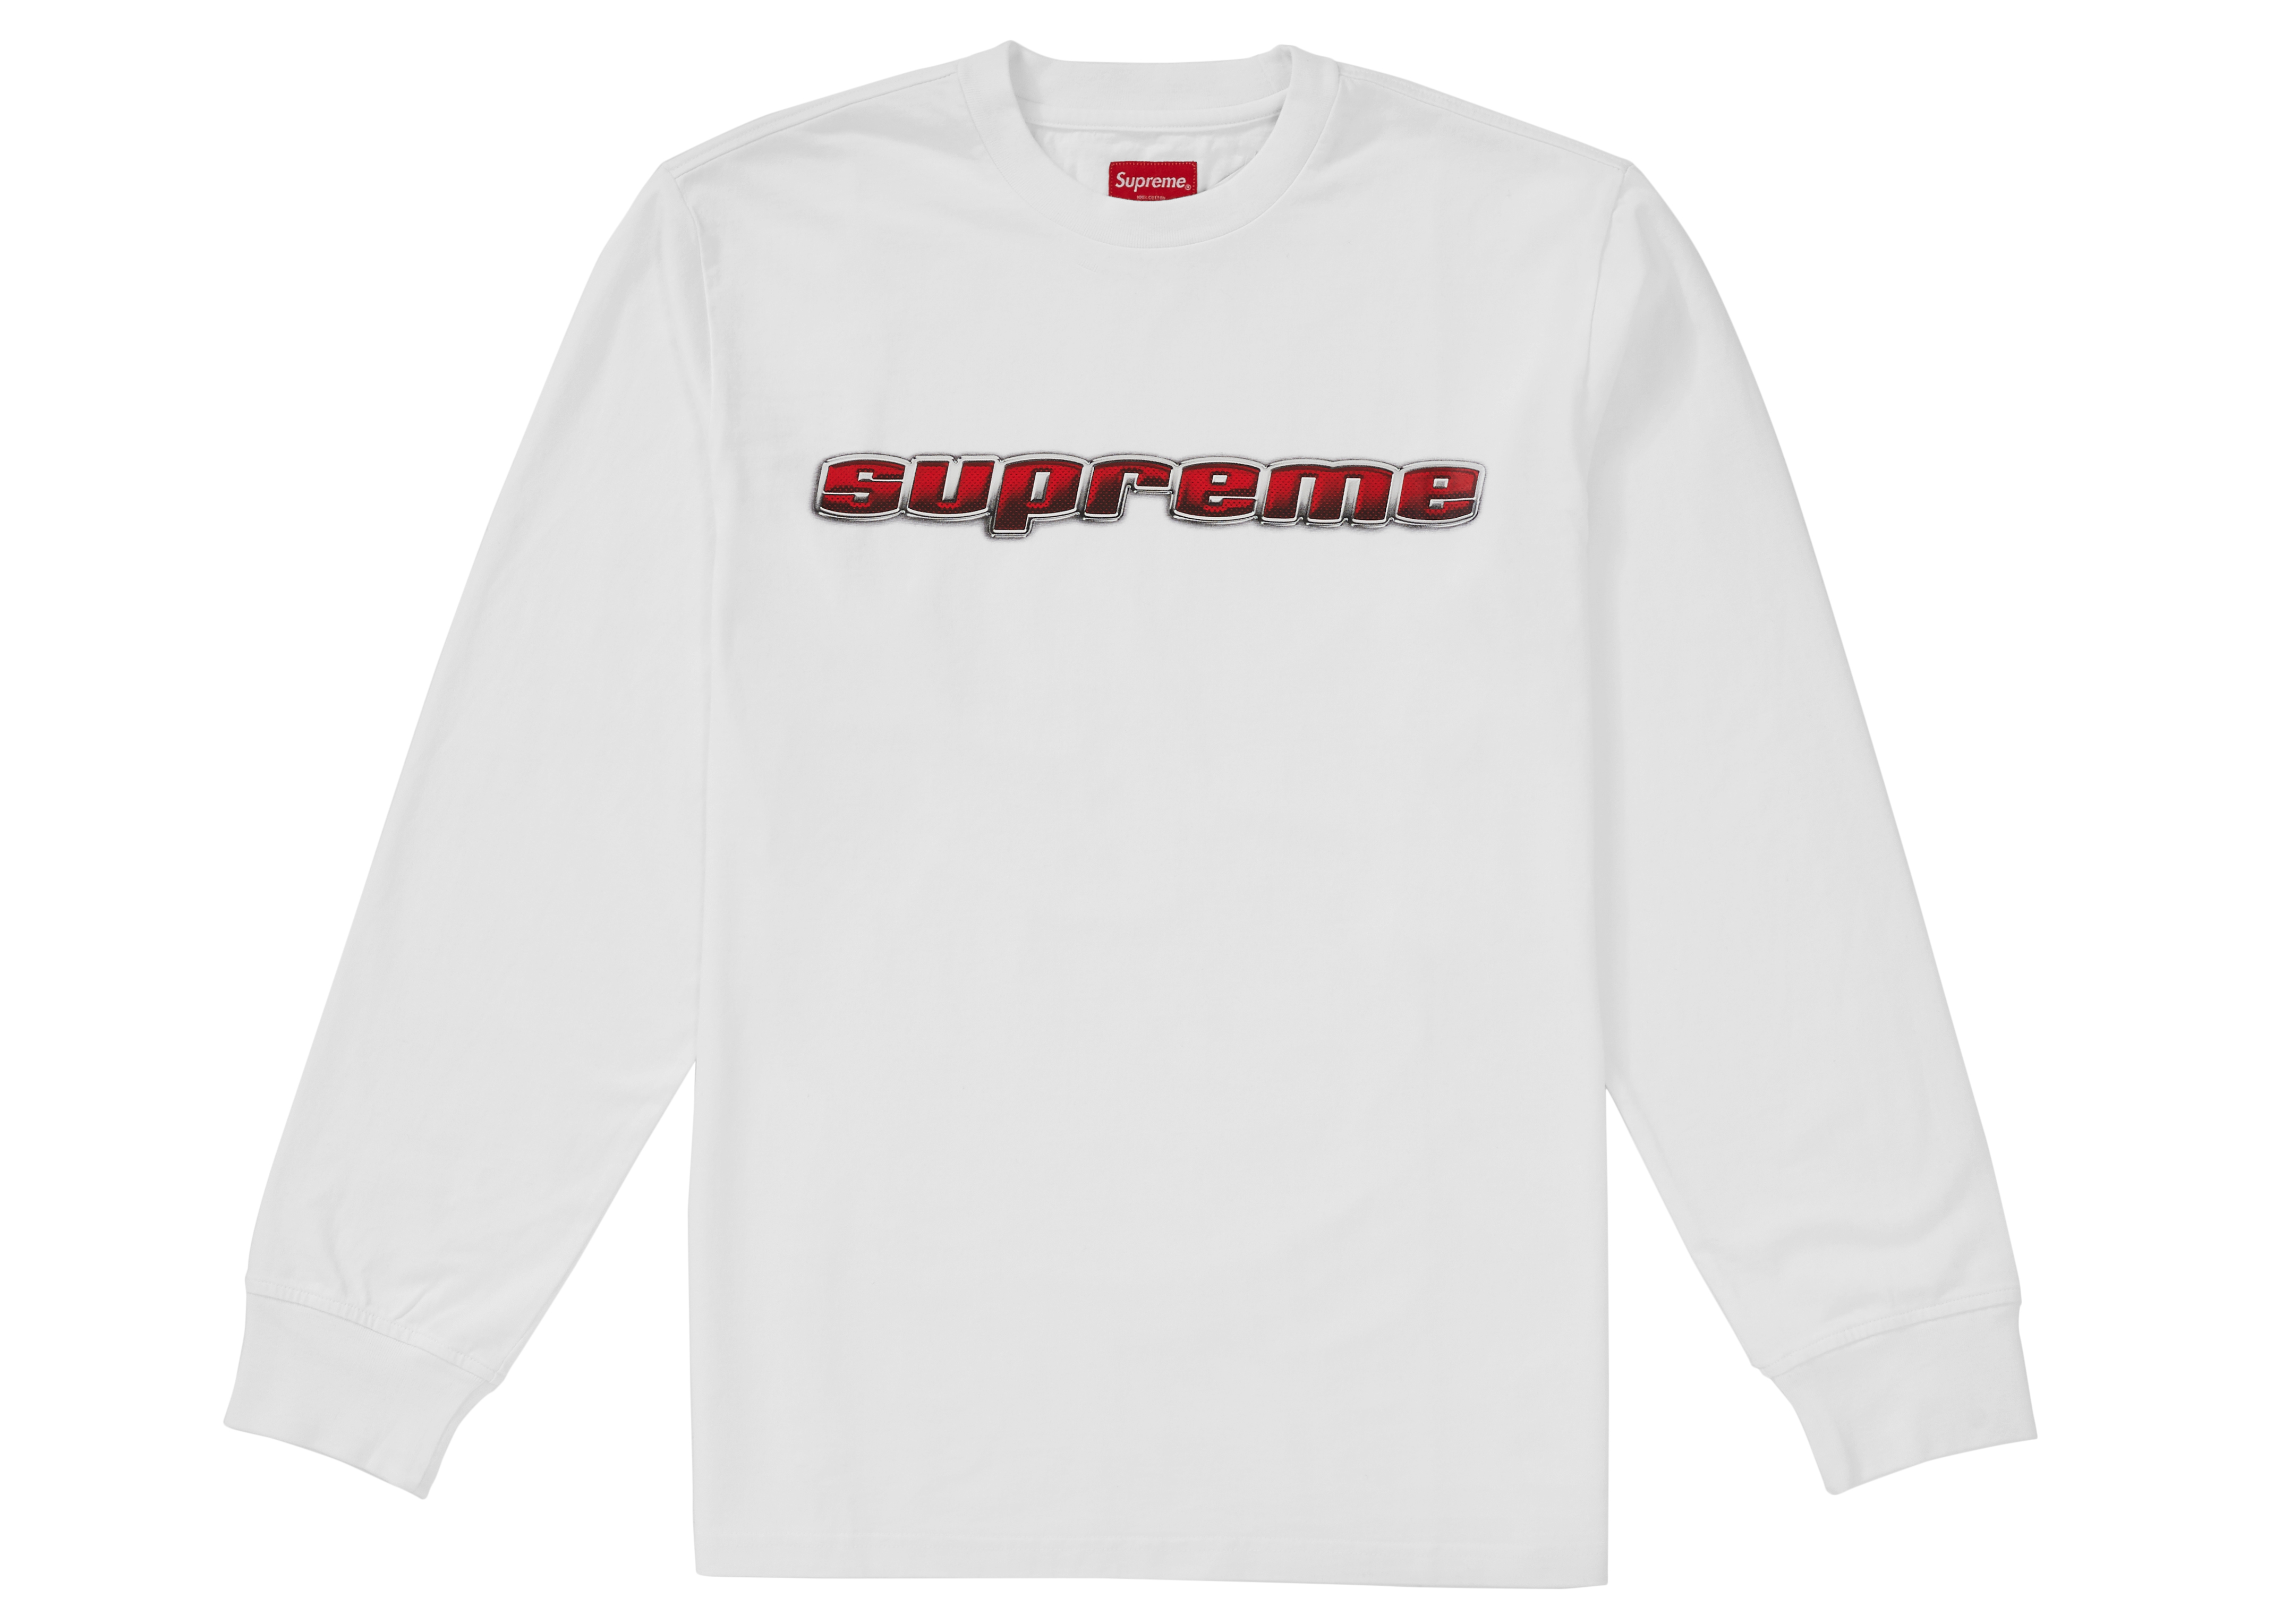 Supreme 19FW Chrome Logo L/S Top ロンT